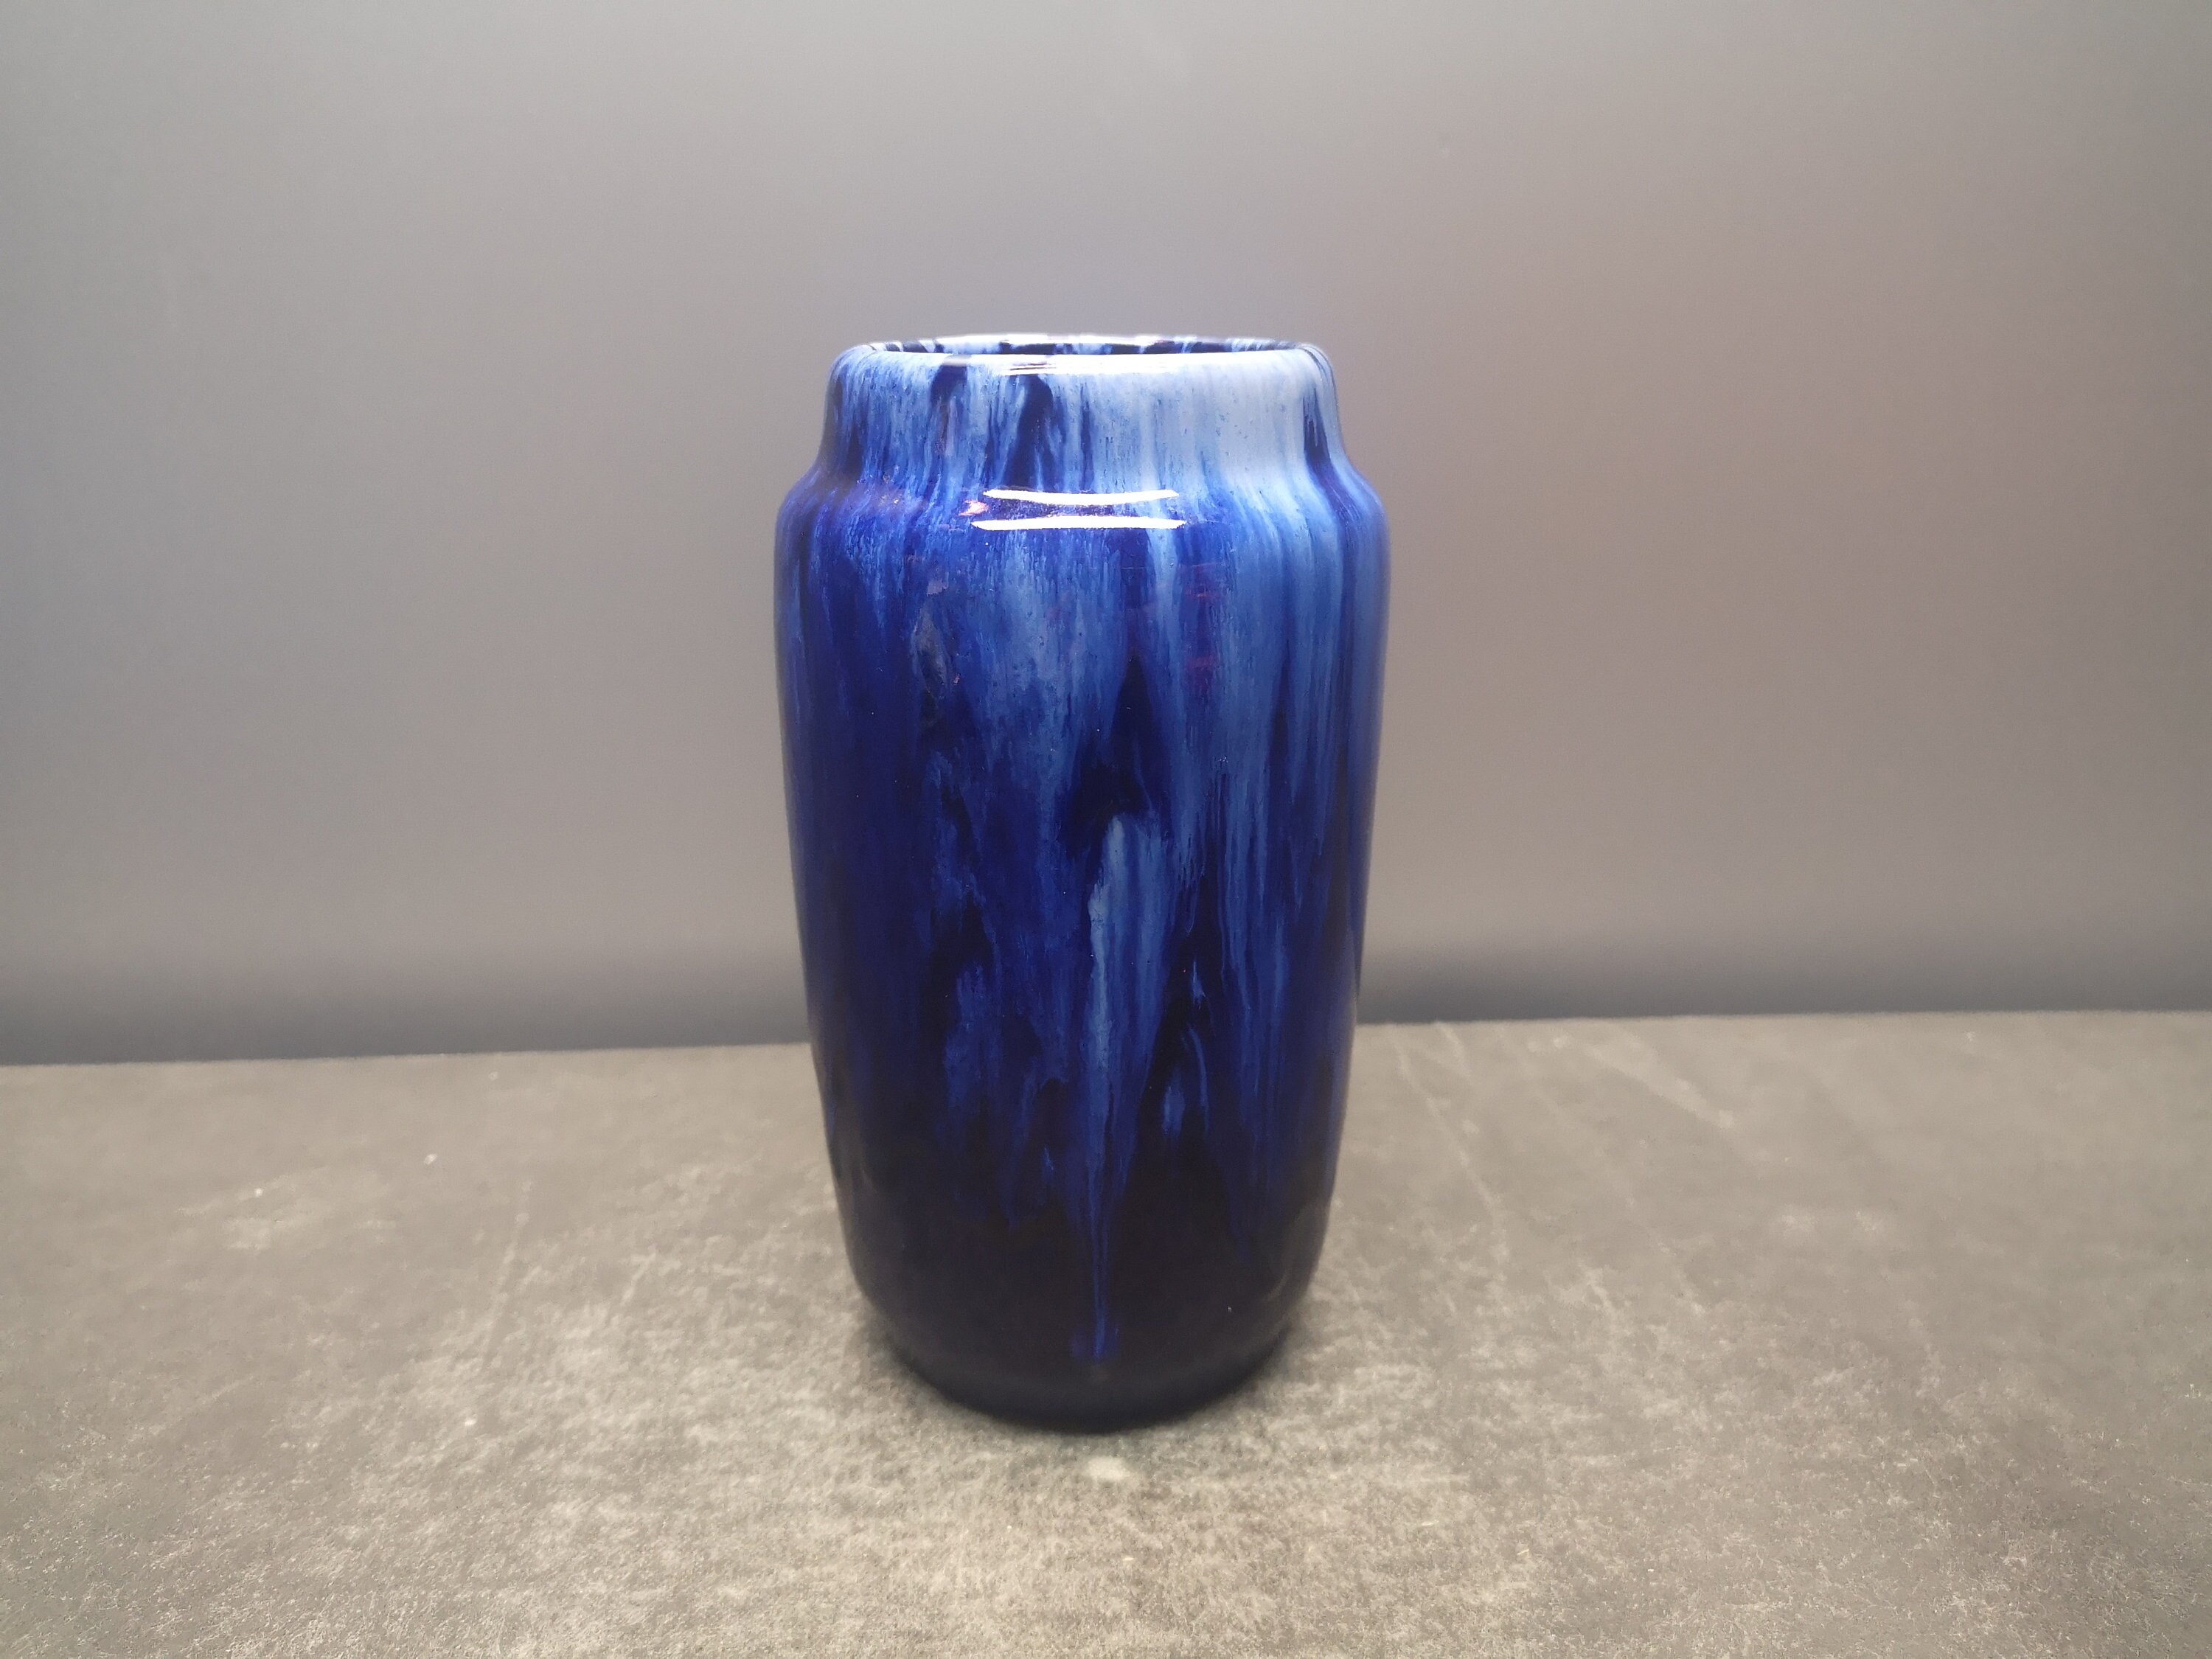 Scheurich 231-15 Ceramic vase 70s blue modernist design designclassics24